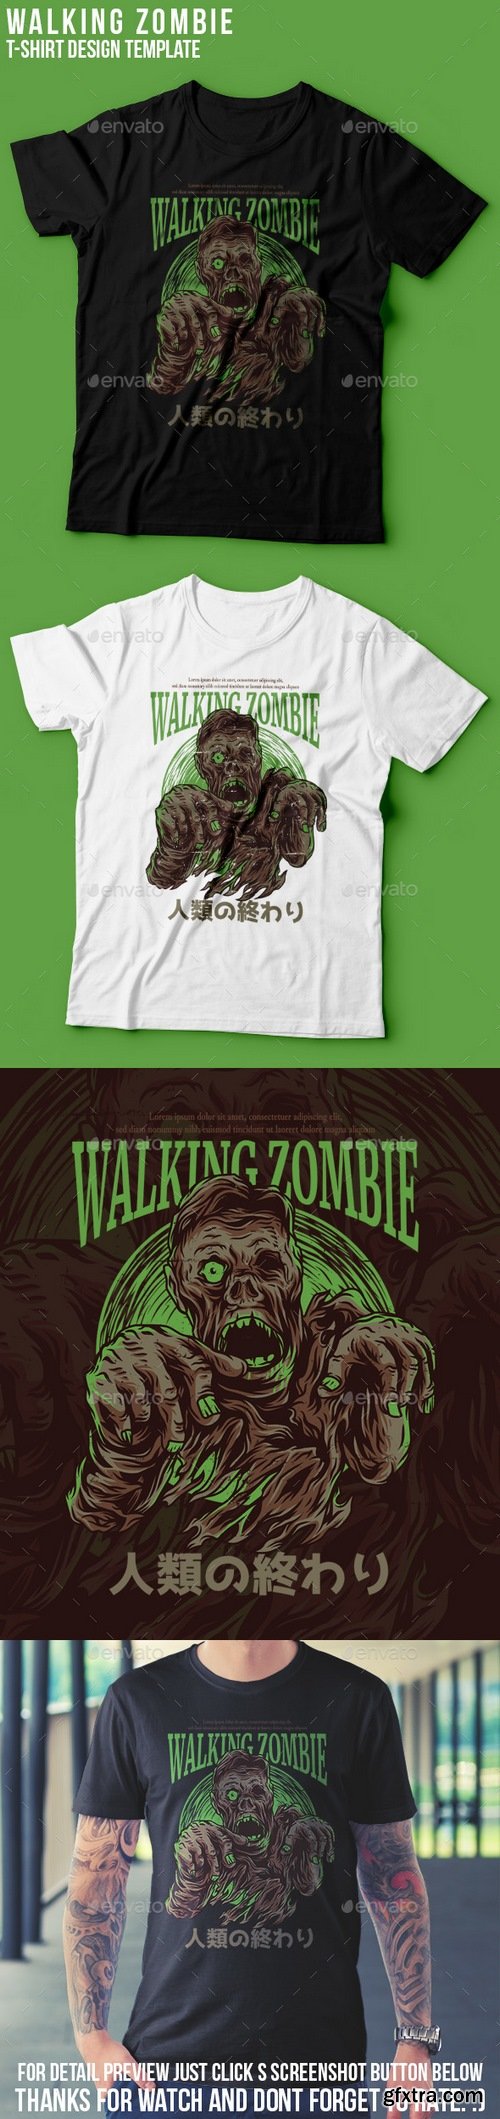 Graphicriver - Walking Zombie T-Shirt Design 22801465